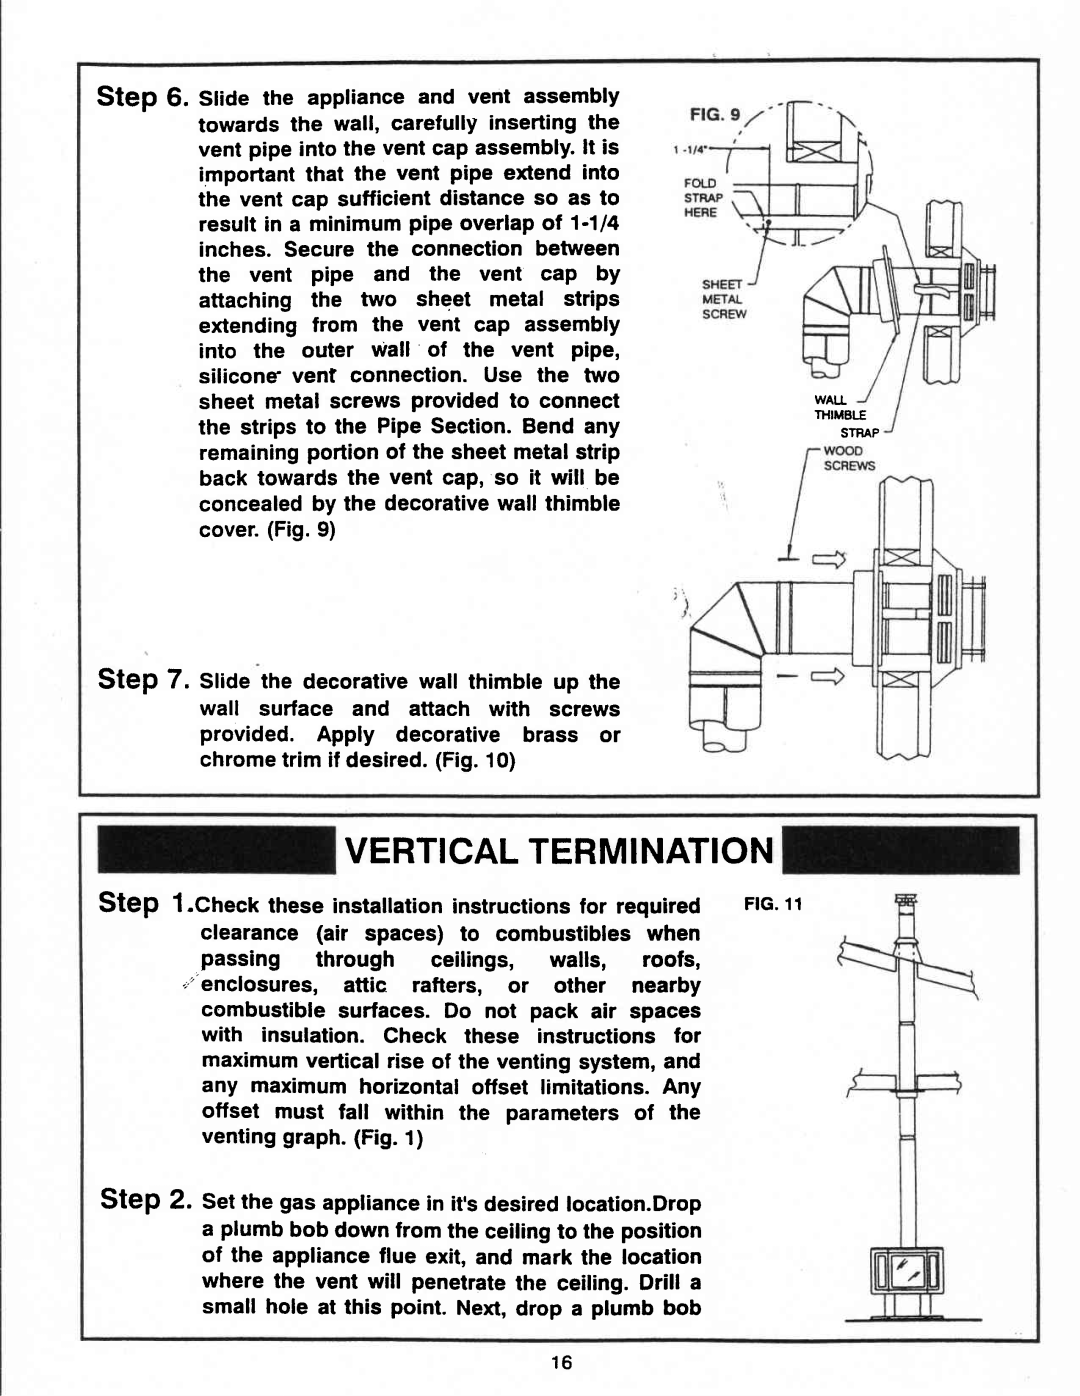 Vermont Casting G600 manual Verticaltermination 